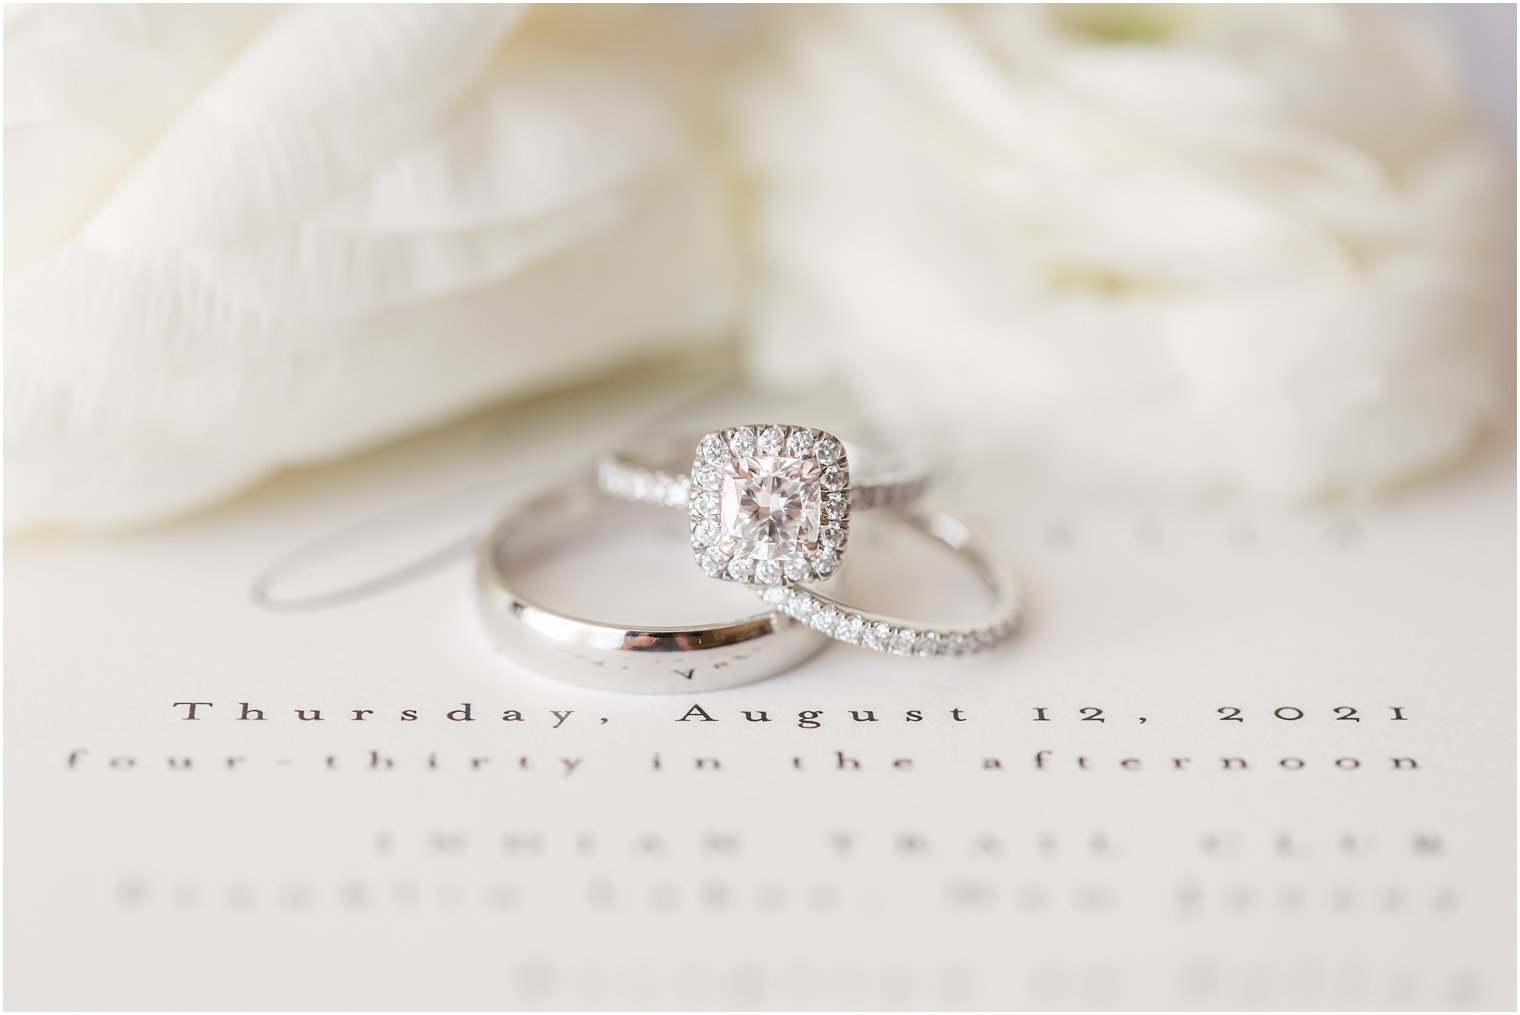 wedding rings sit on classic wedding invitation 